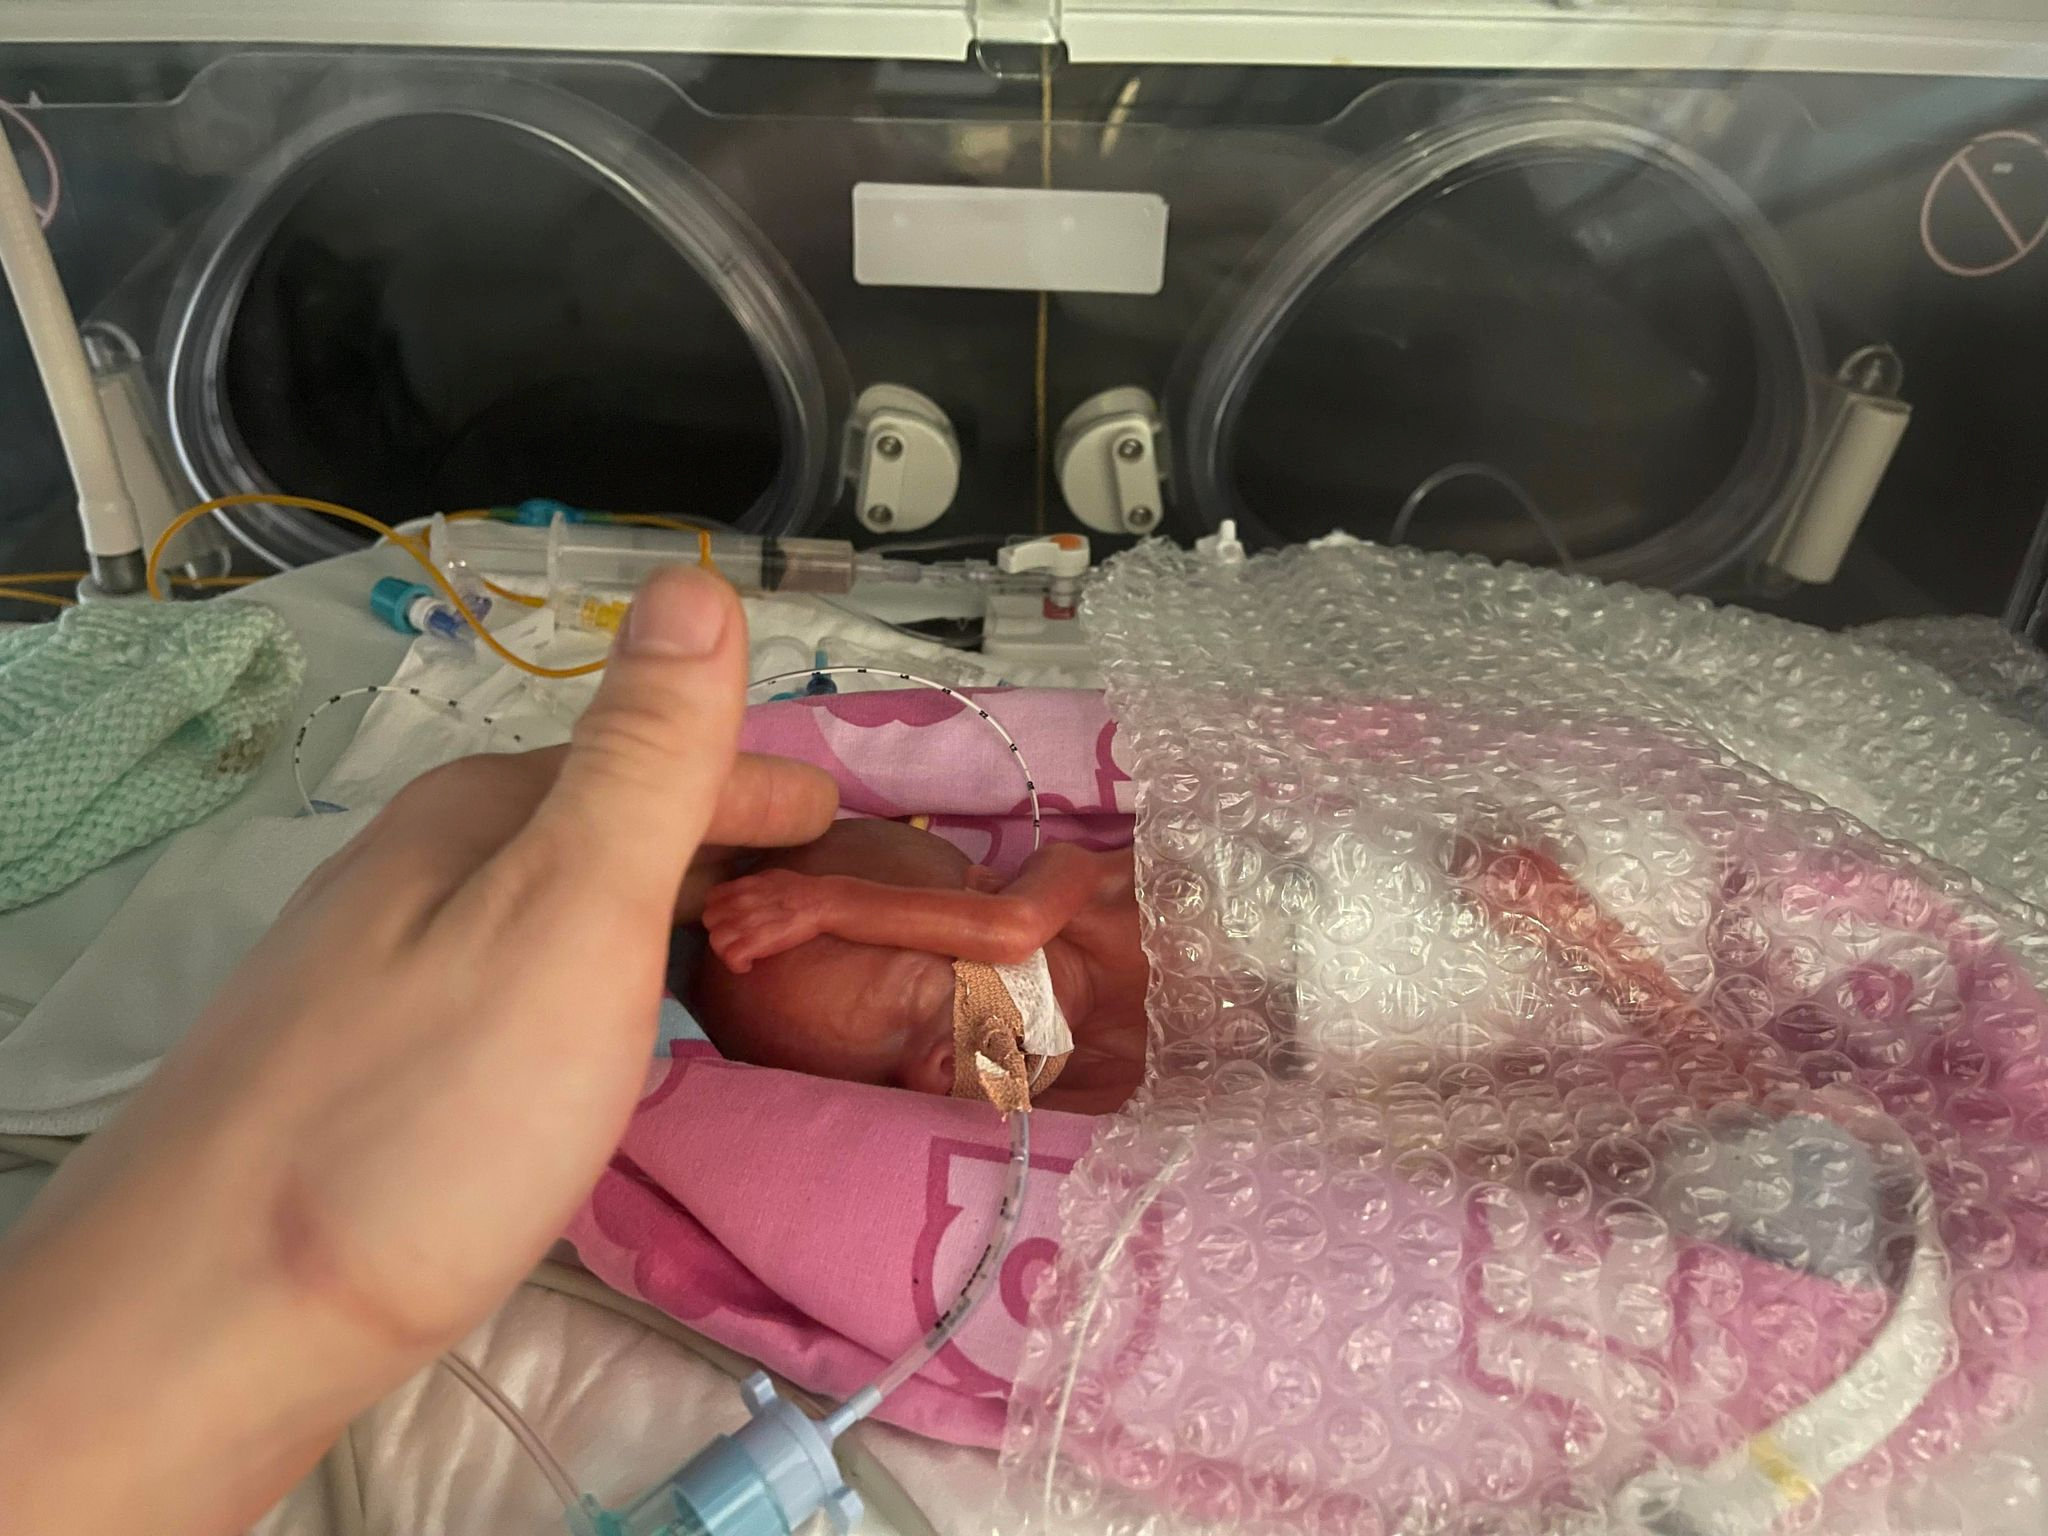 Hannah Stibbles was born 25 weeks premature.